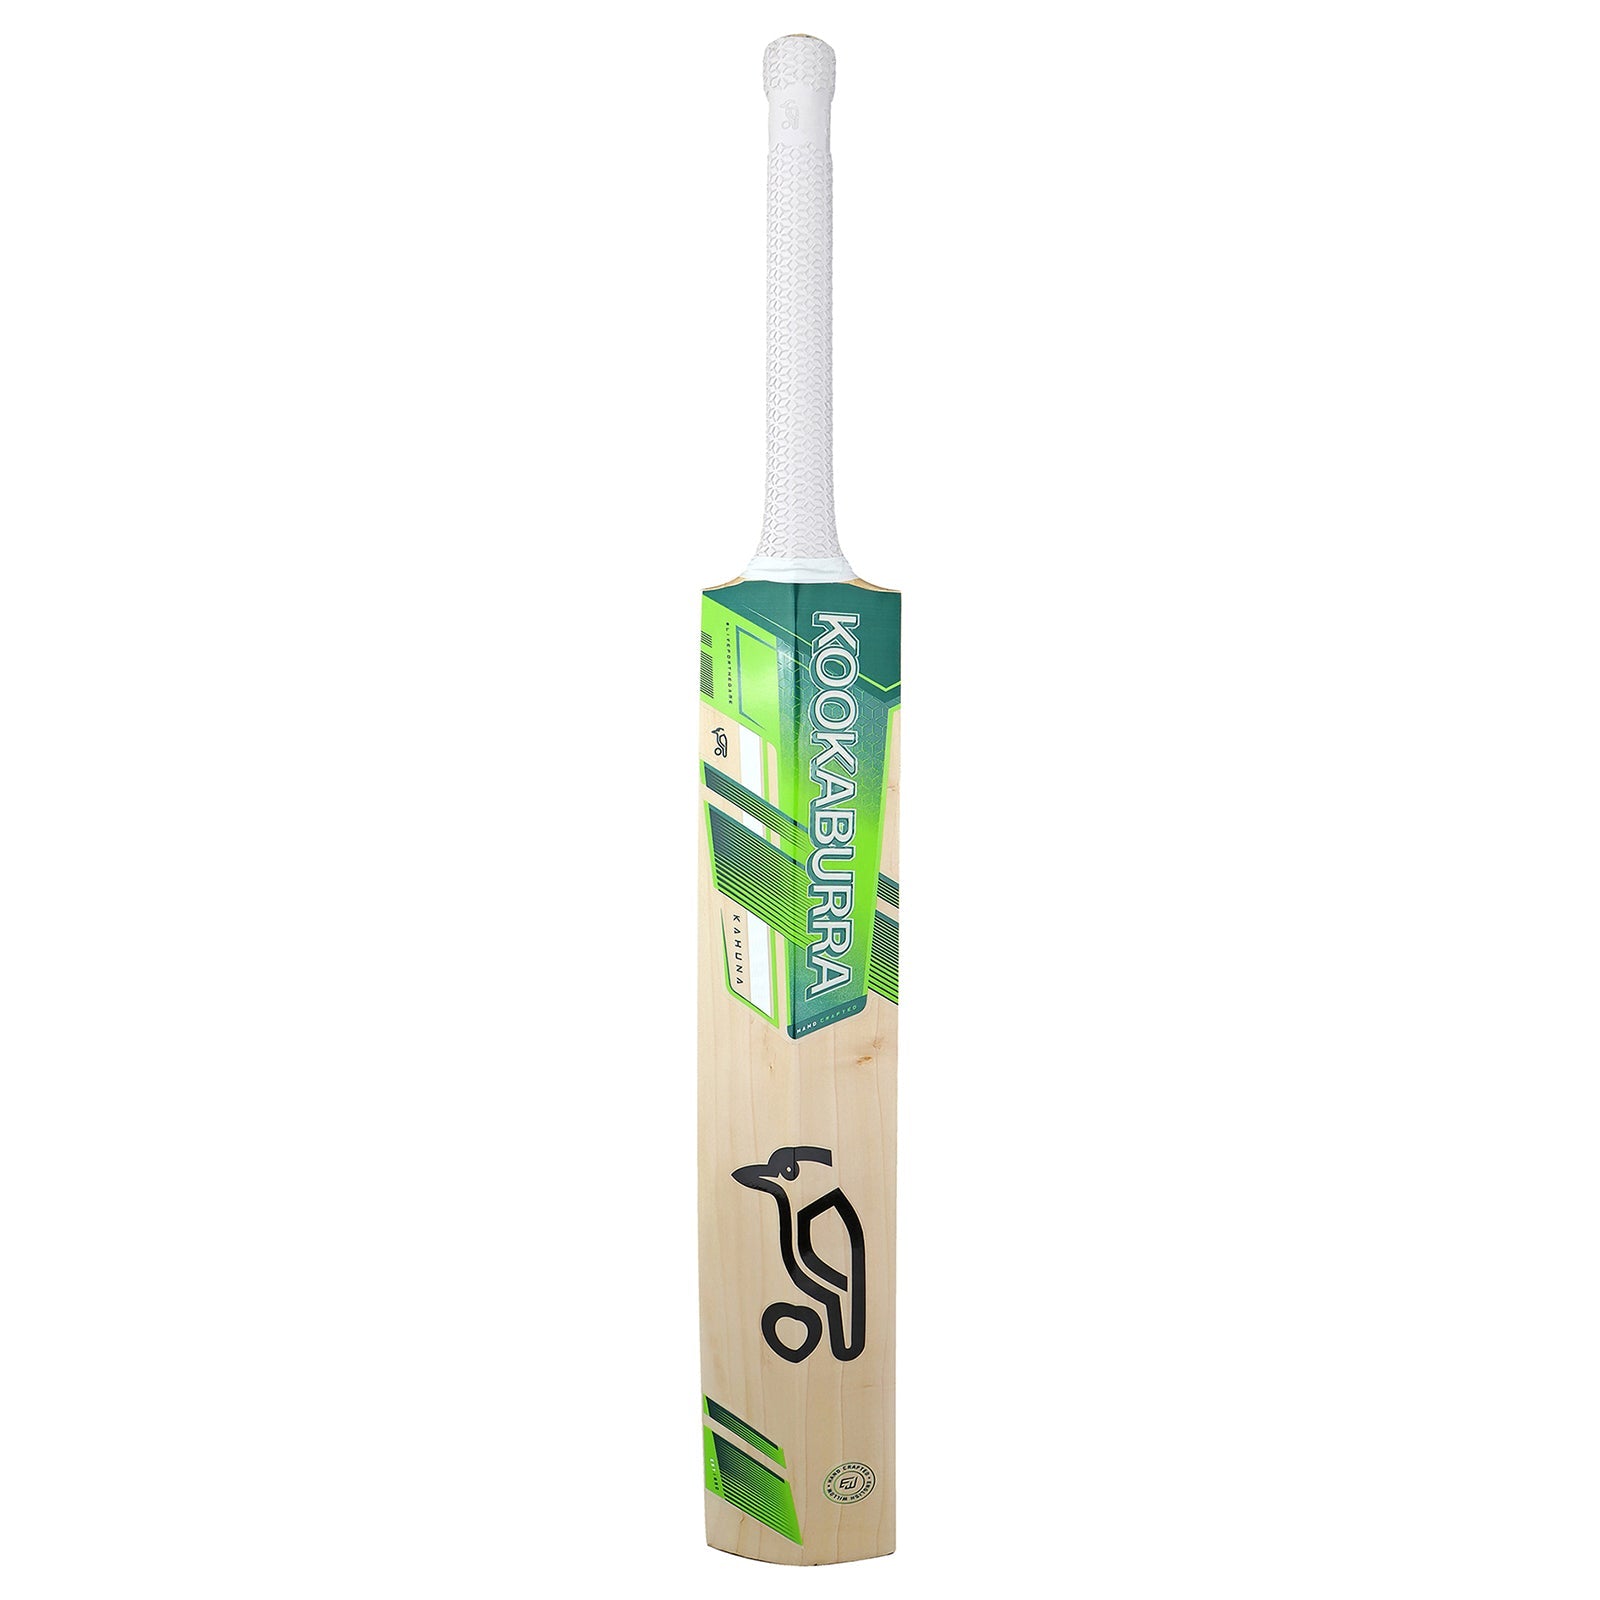 Kookaburra Kahuna Pro 3.0 Cricket Bat - Senior Long Blade